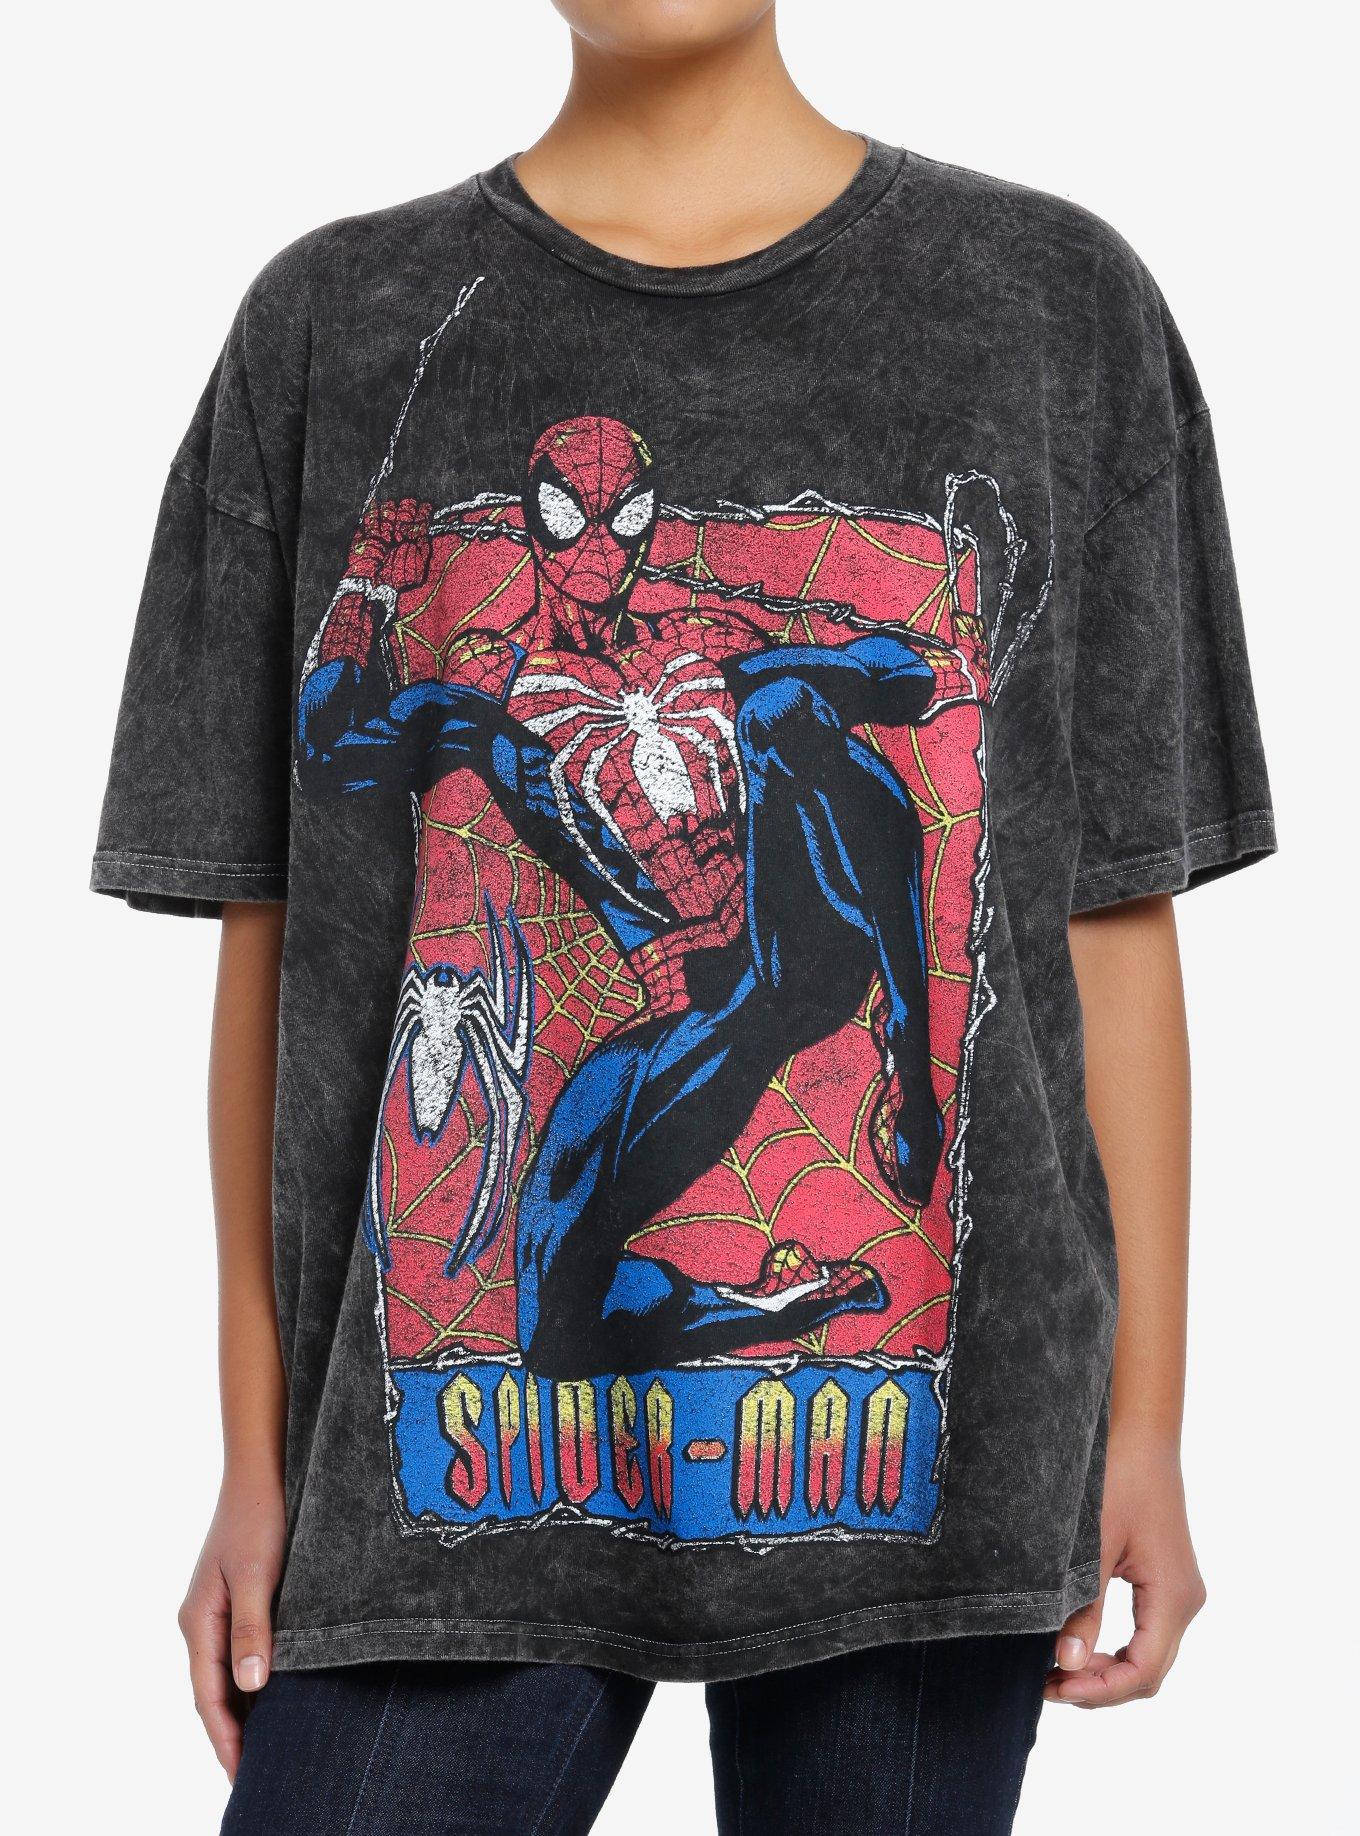 Marvel Spider-Man Swinging Boyfriend Fit Girls T-Shirt | Hot Topic